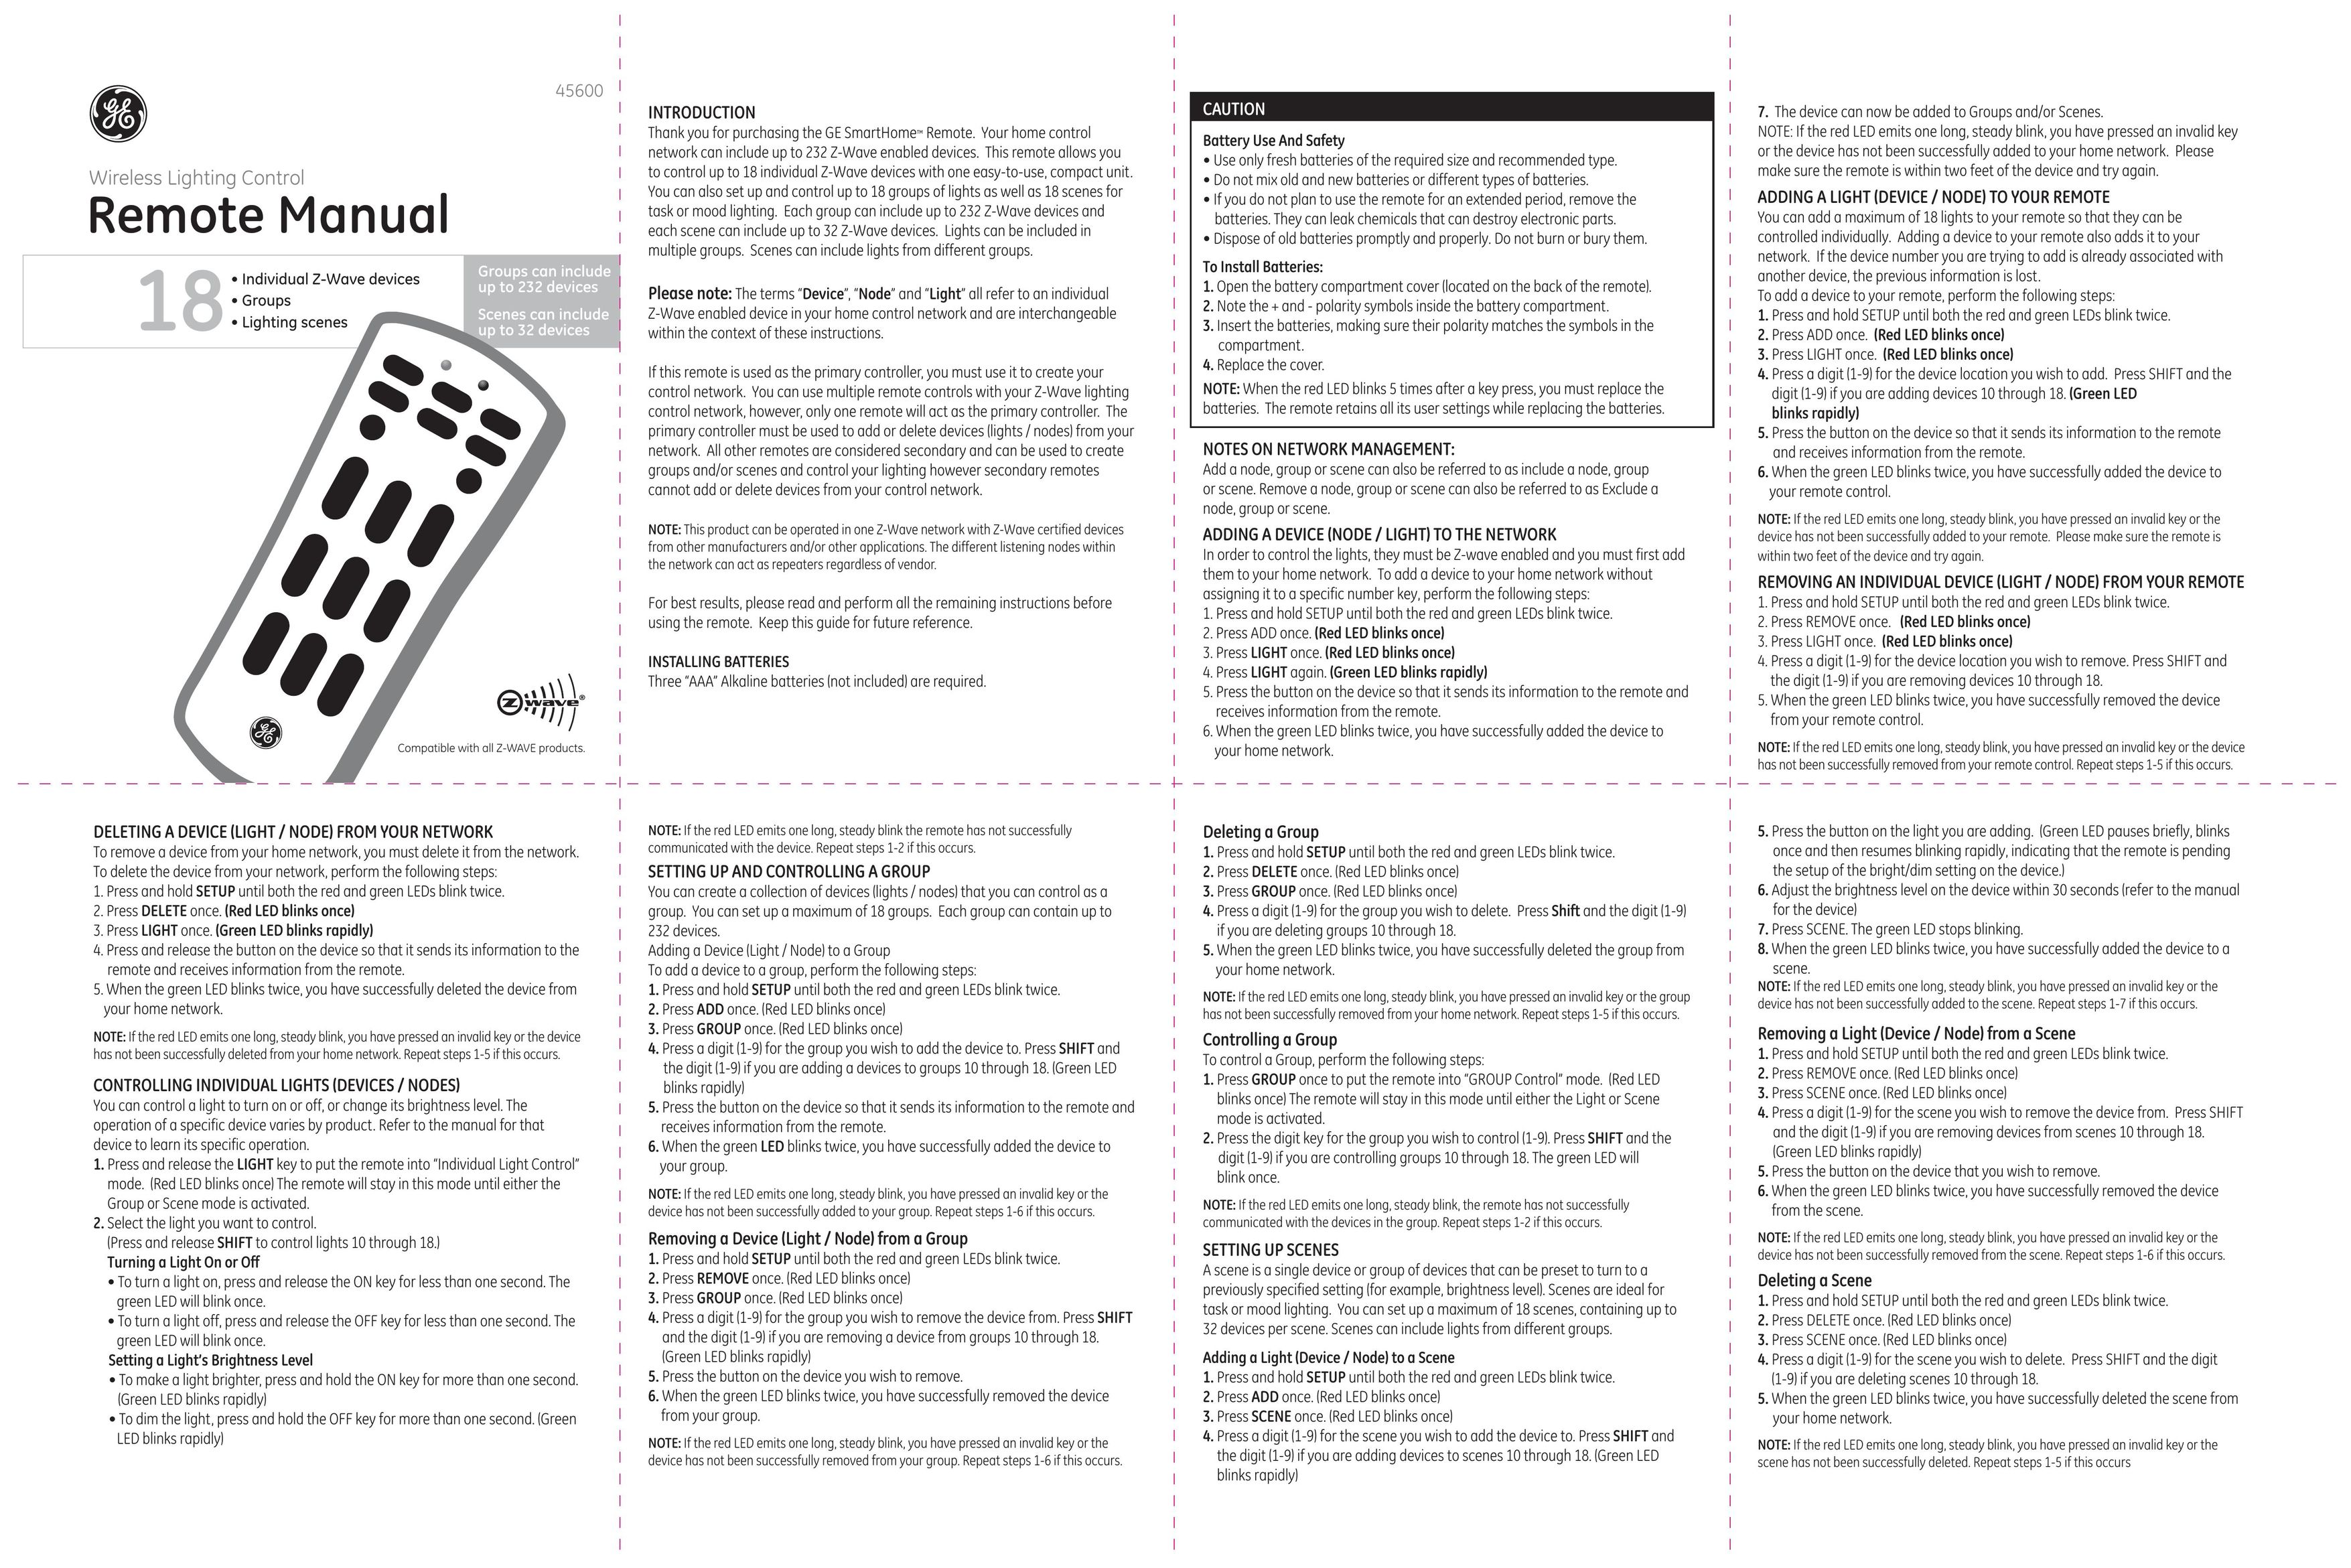 GE 45600 Universal Remote User Manual